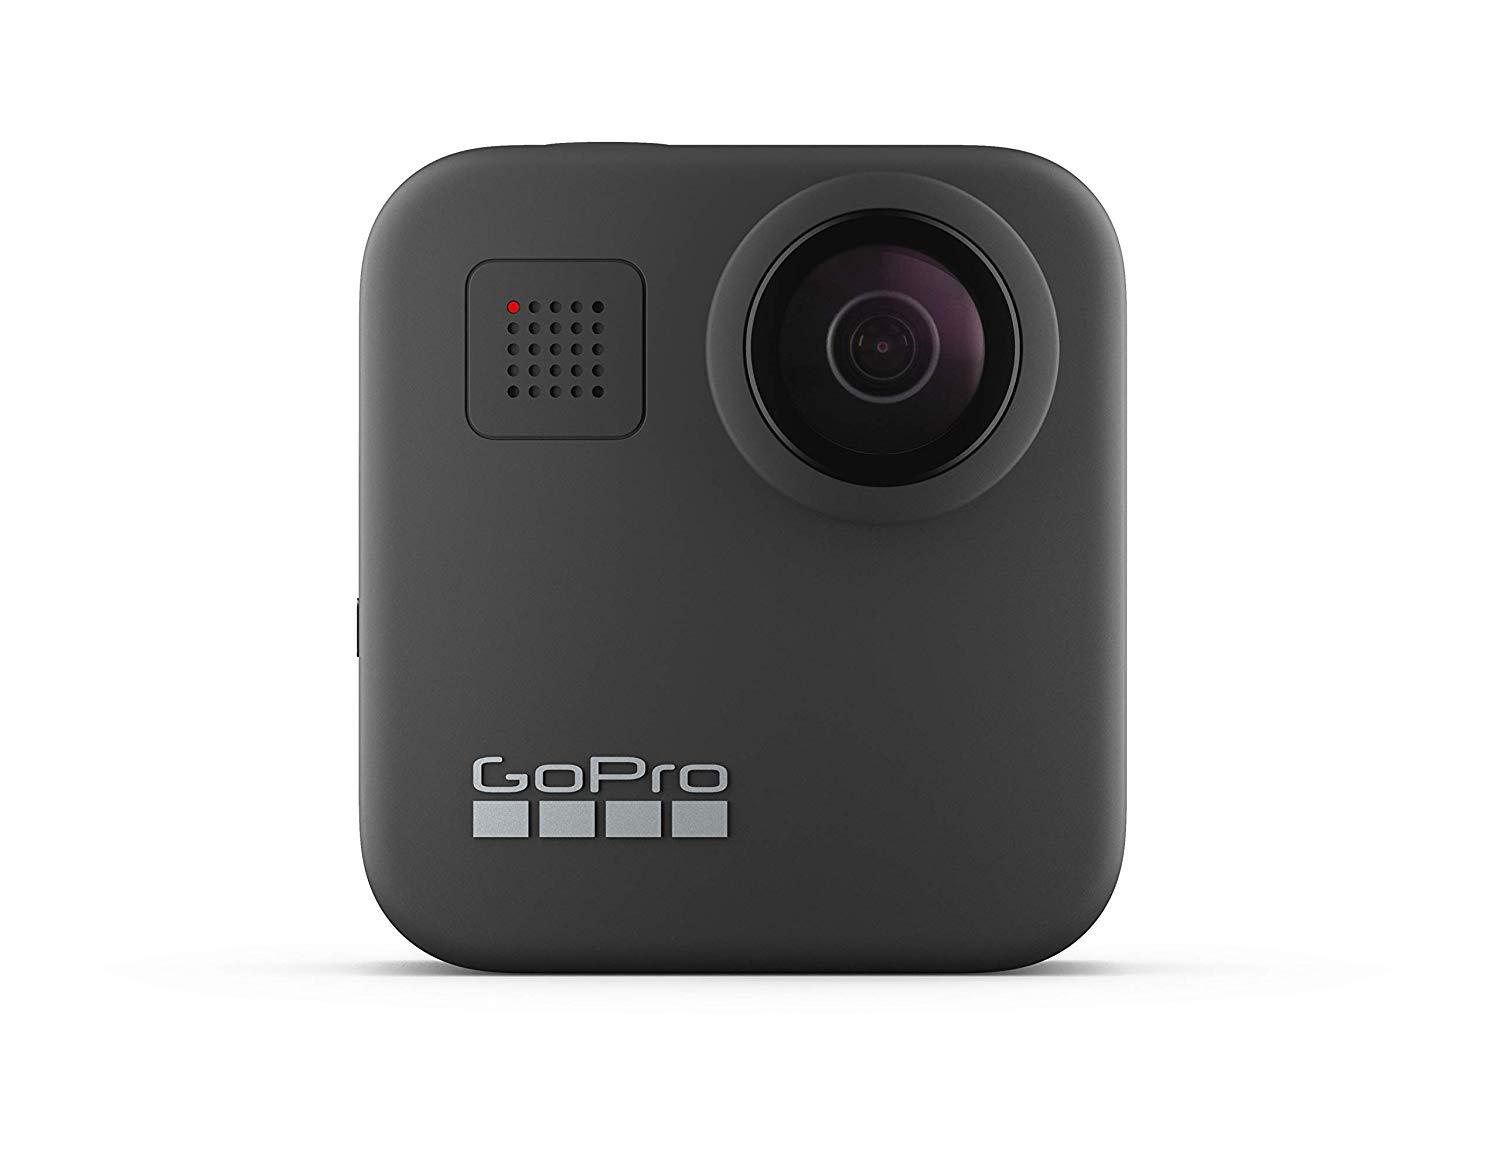 Open Box, Unused GoPro Max Chdhz 201 RW 16.6 MP Hero 360 footage